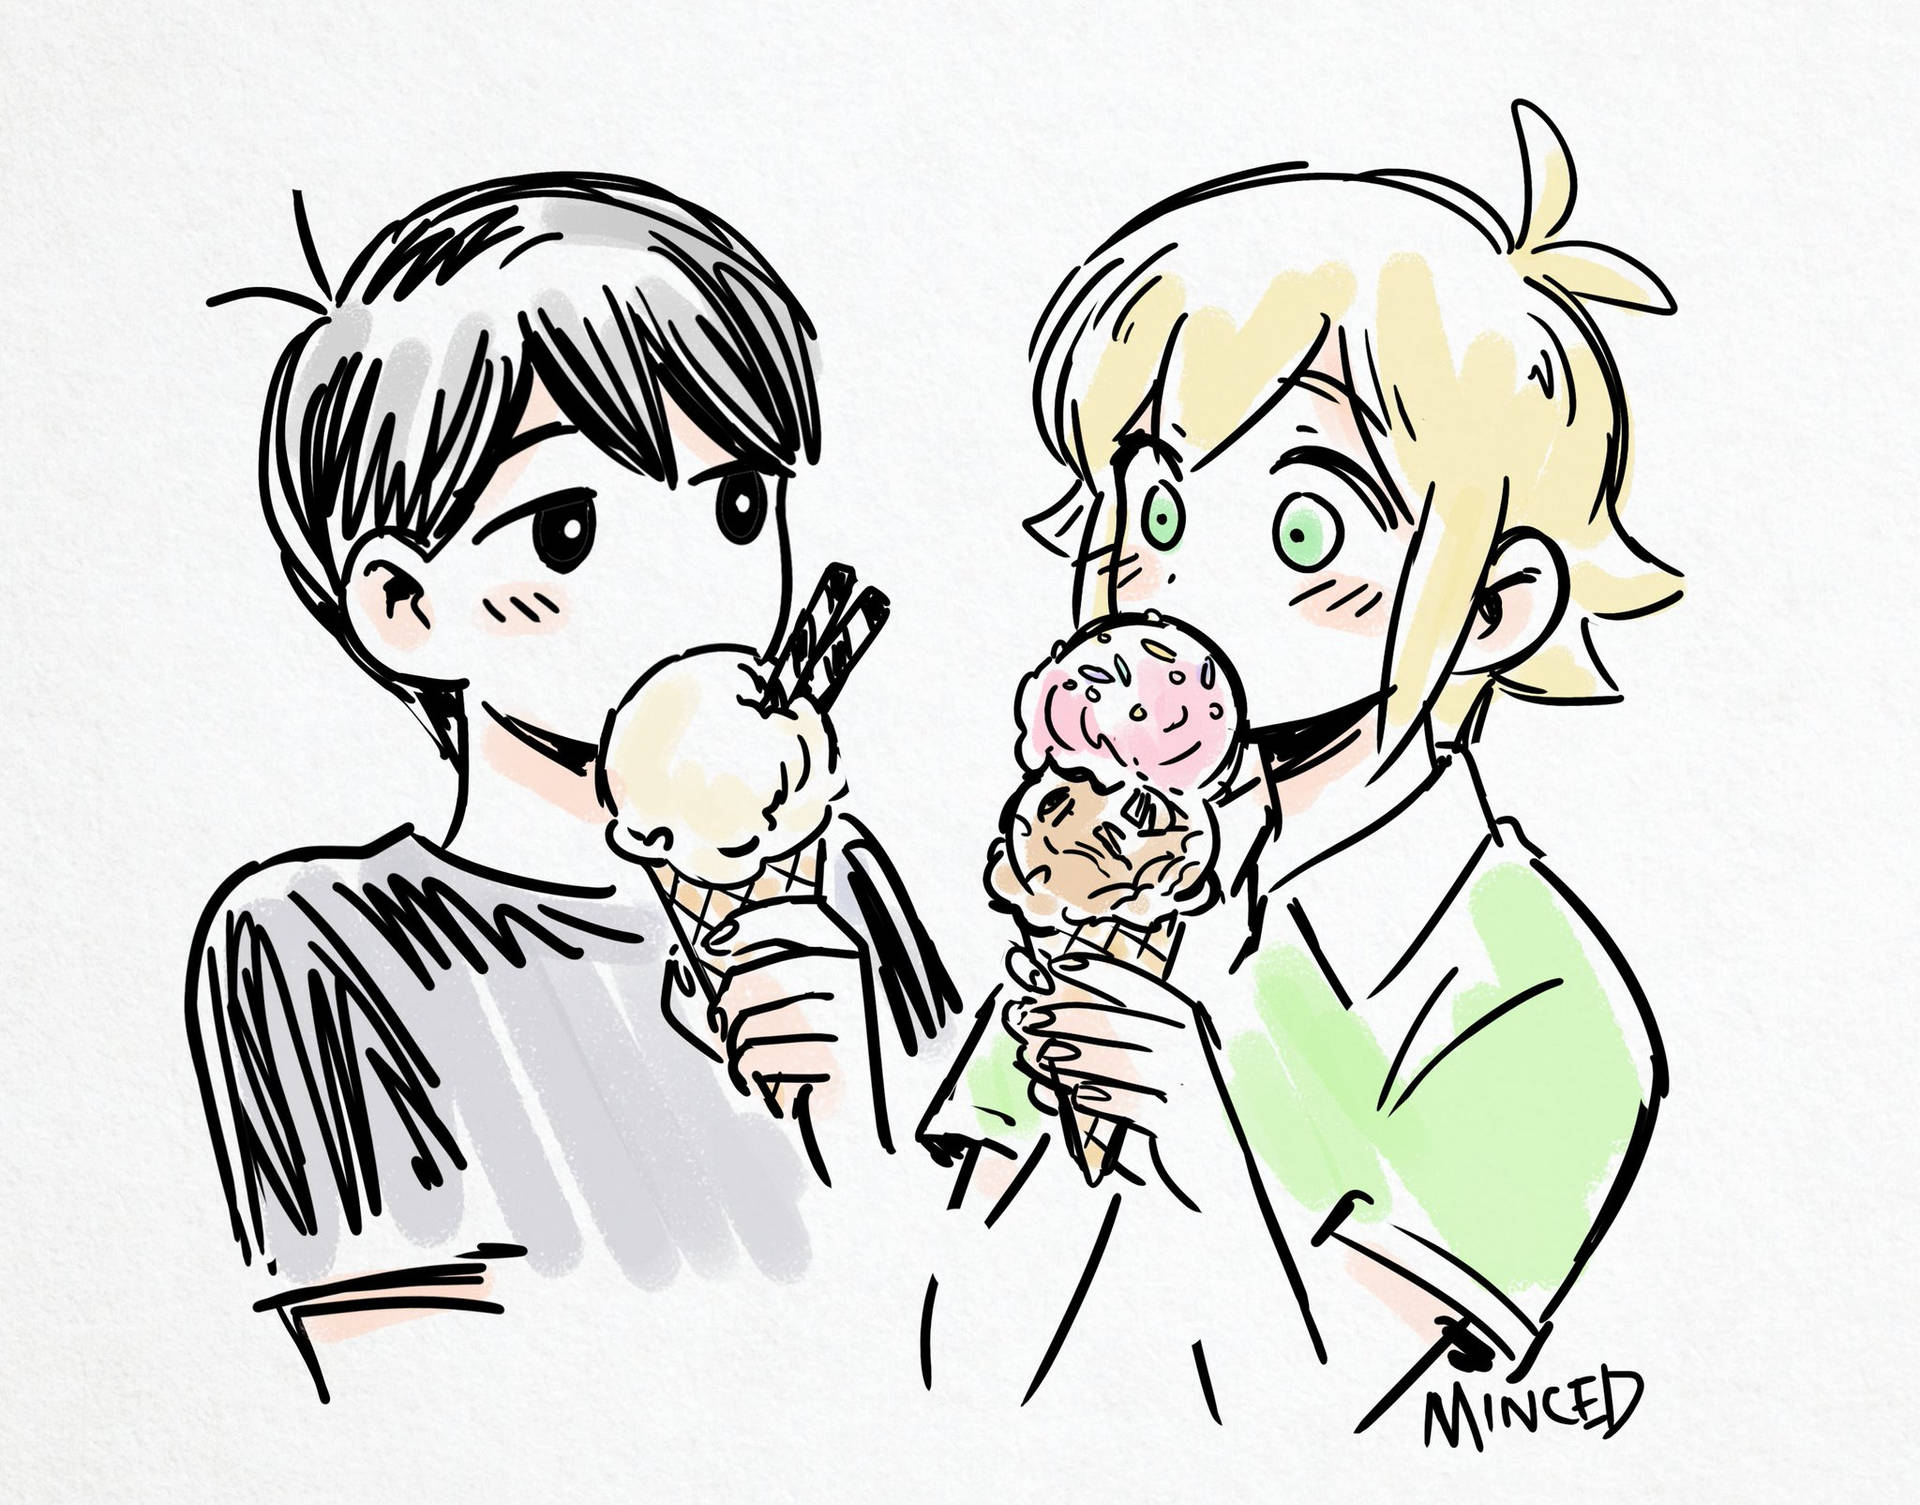 Omori Eating Ice Cream Together